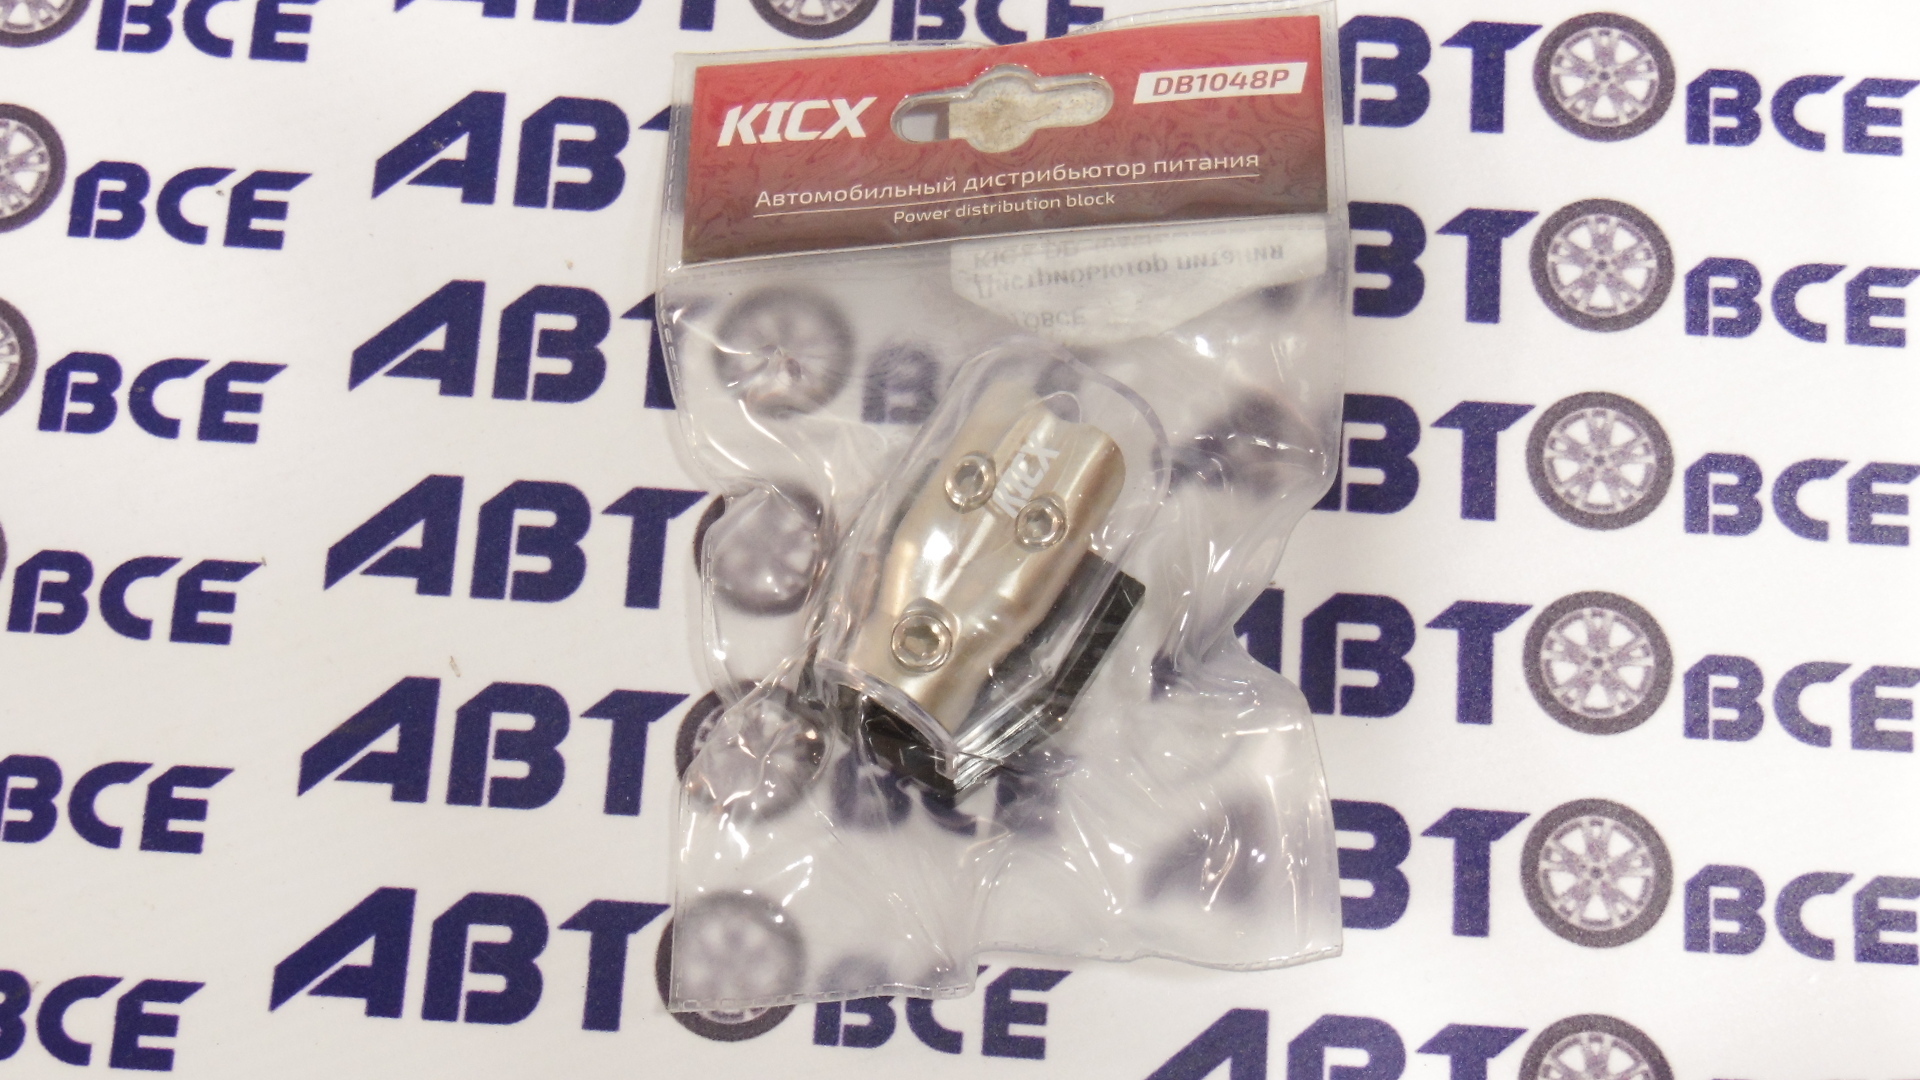 Дистрибьютор питания - разветлитель силового кабеля (DB1048P) KICX